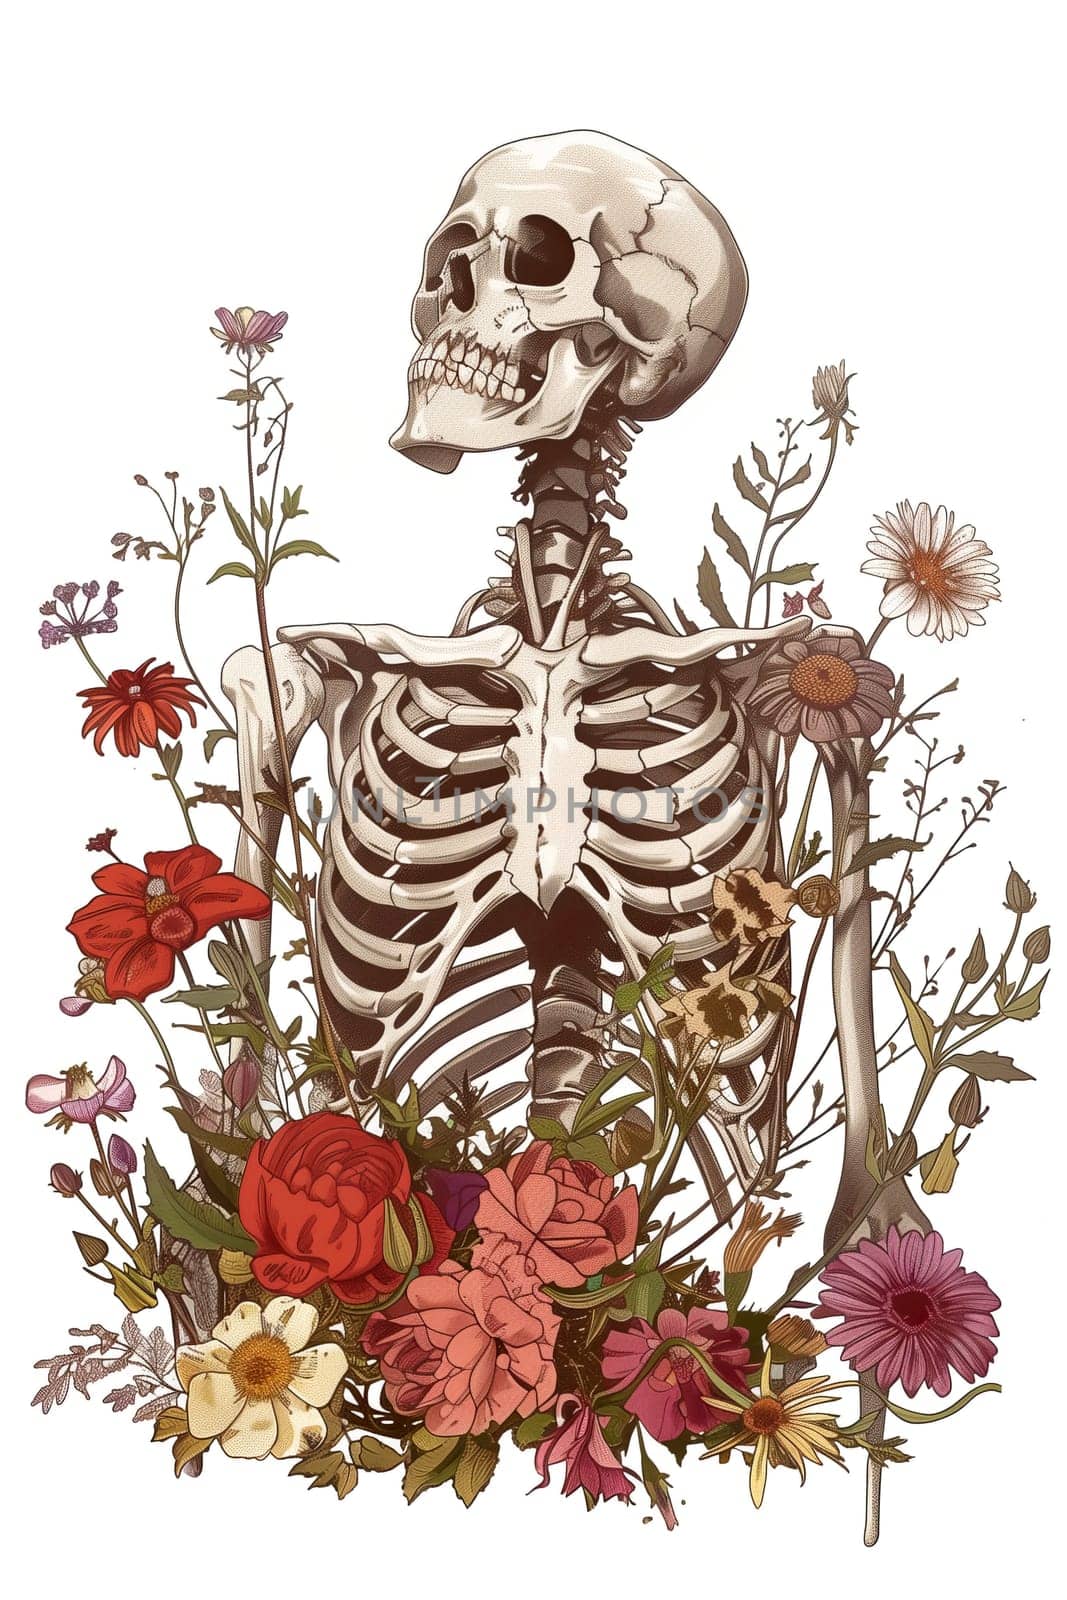 Vintage Illustration of skeleton with flowers by Dustick